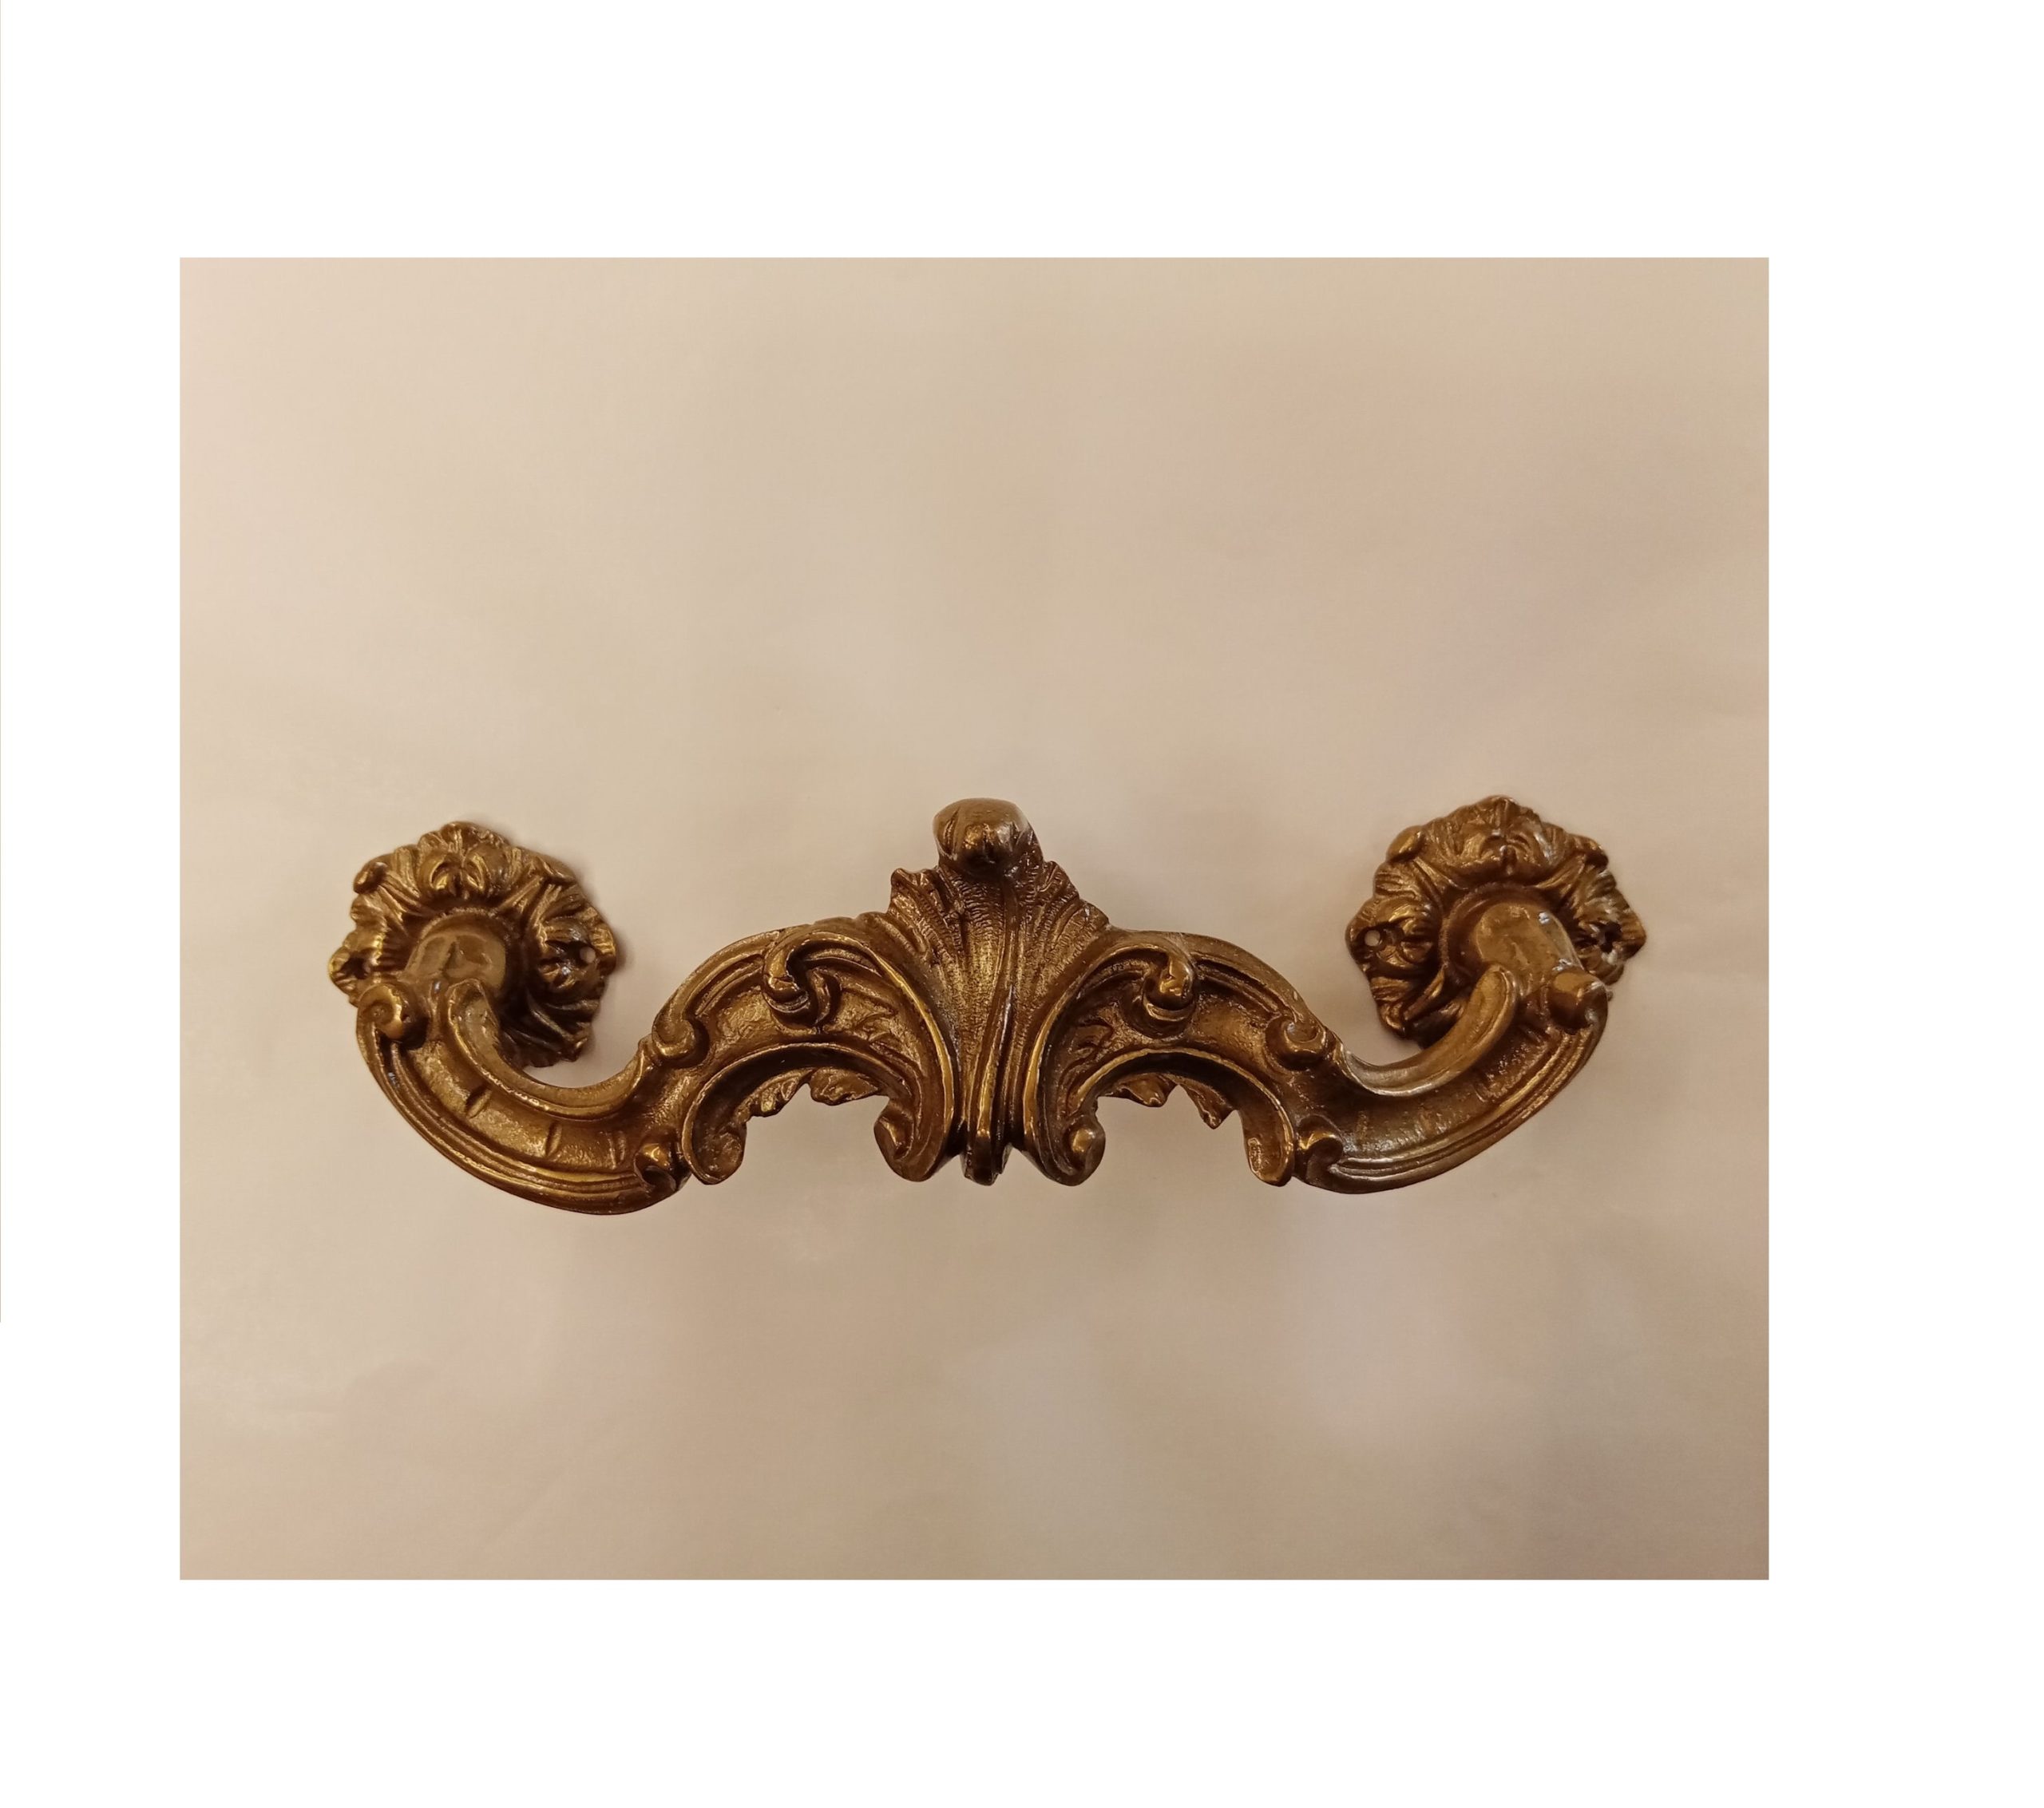 maniglione stile 700 - 700 style handle in cast brass